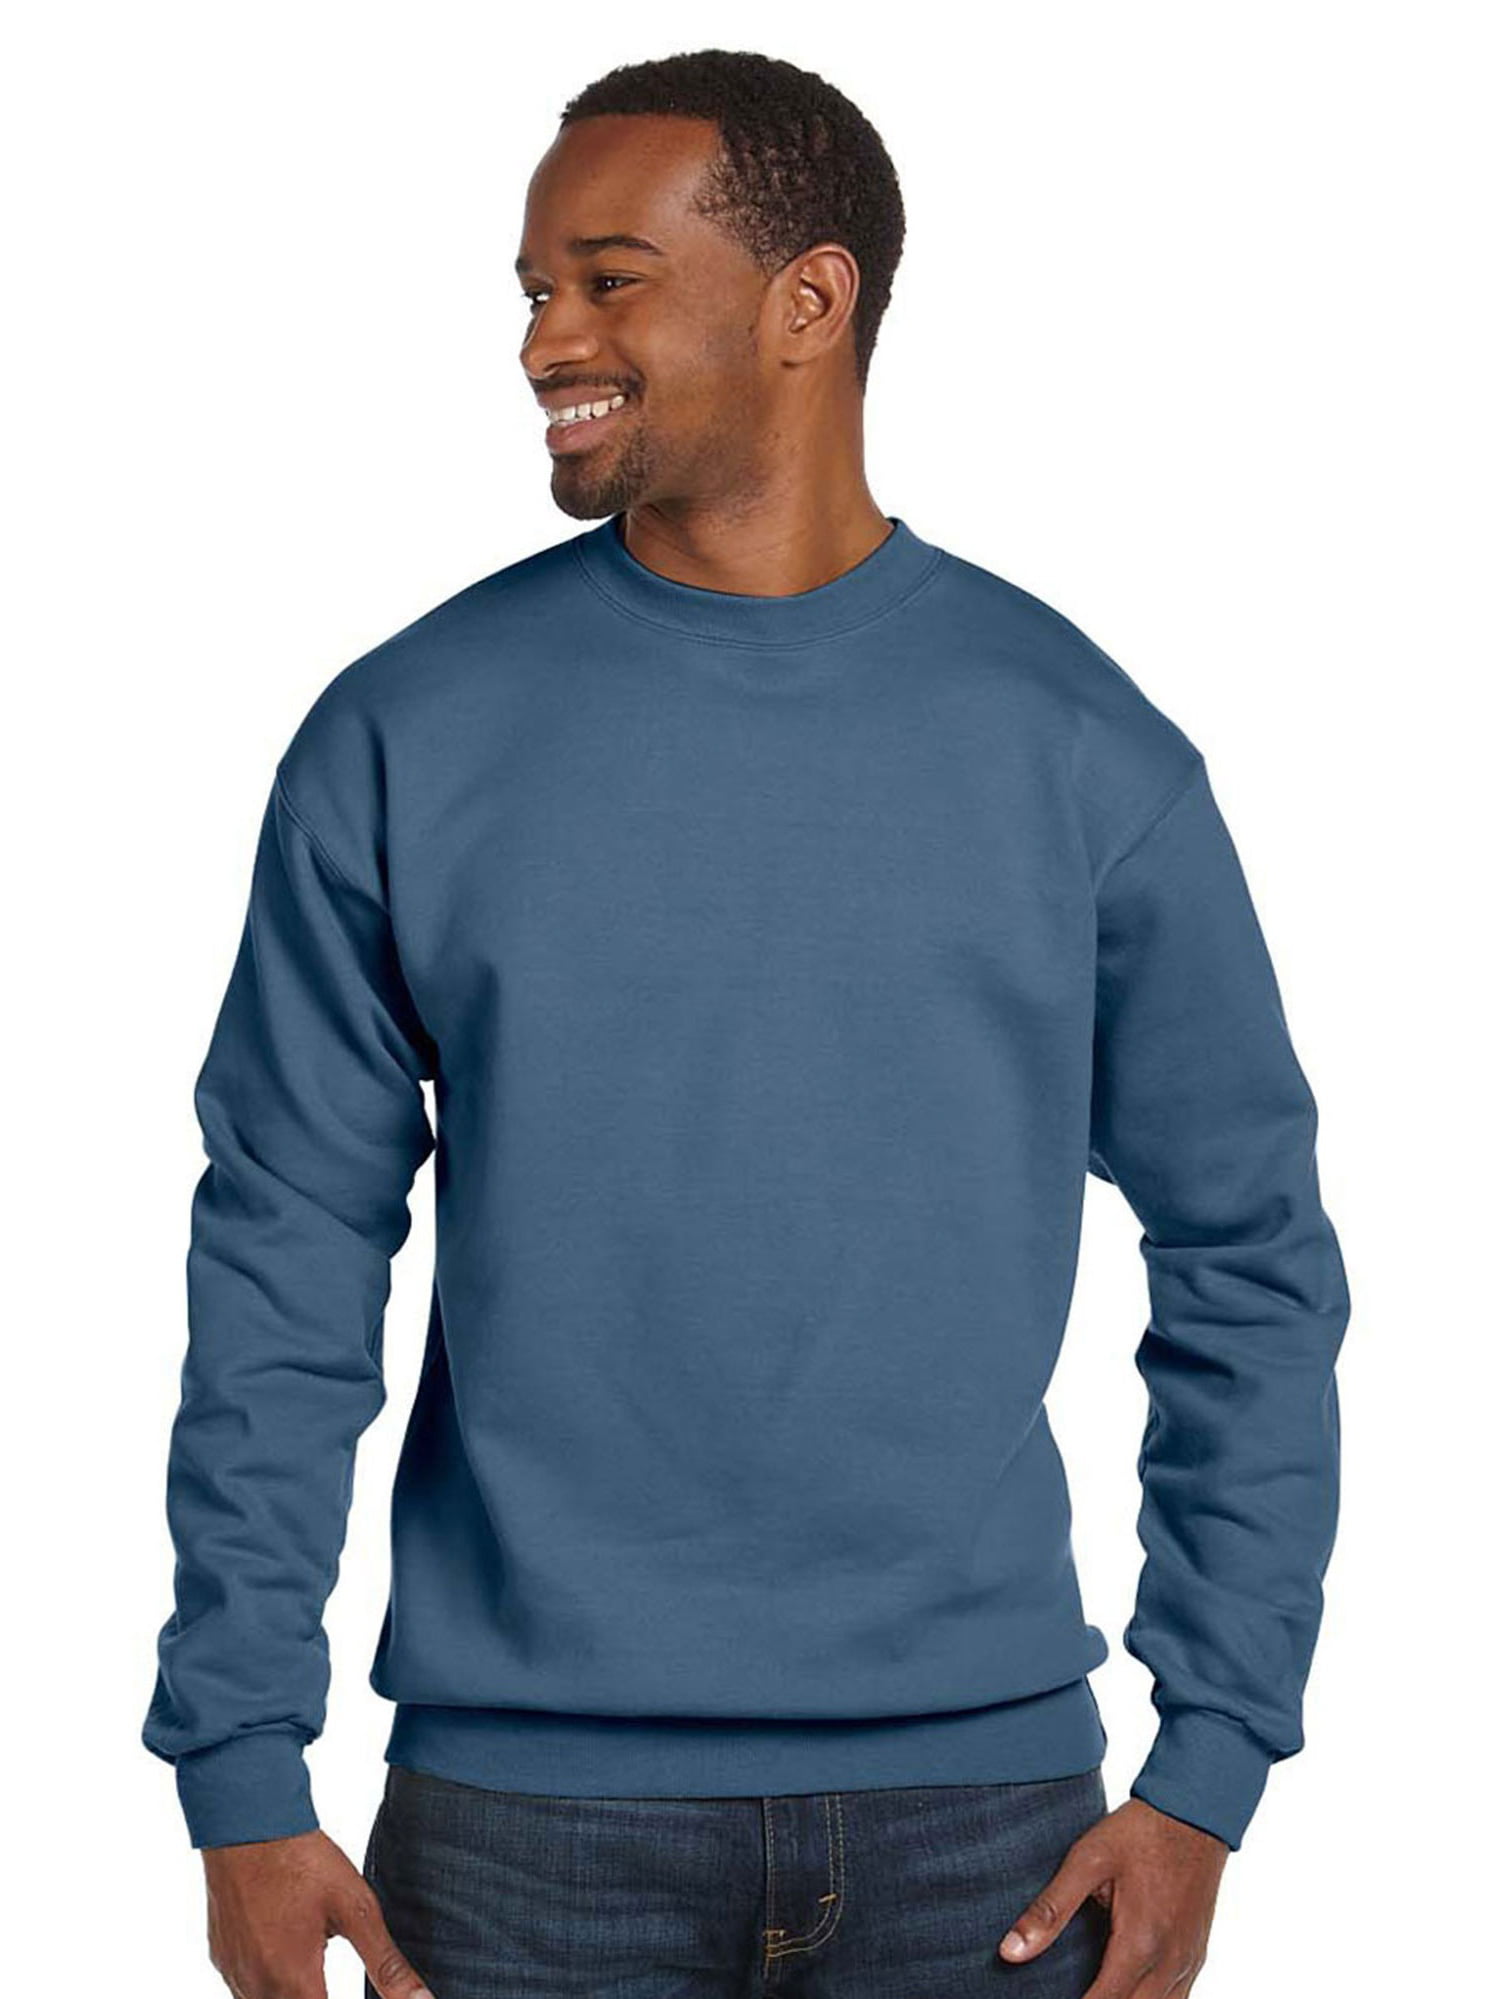 Hanes - Hanes Mens ComfortBlend Crewneck Sweatshirt, Denim Blue, Medium ...